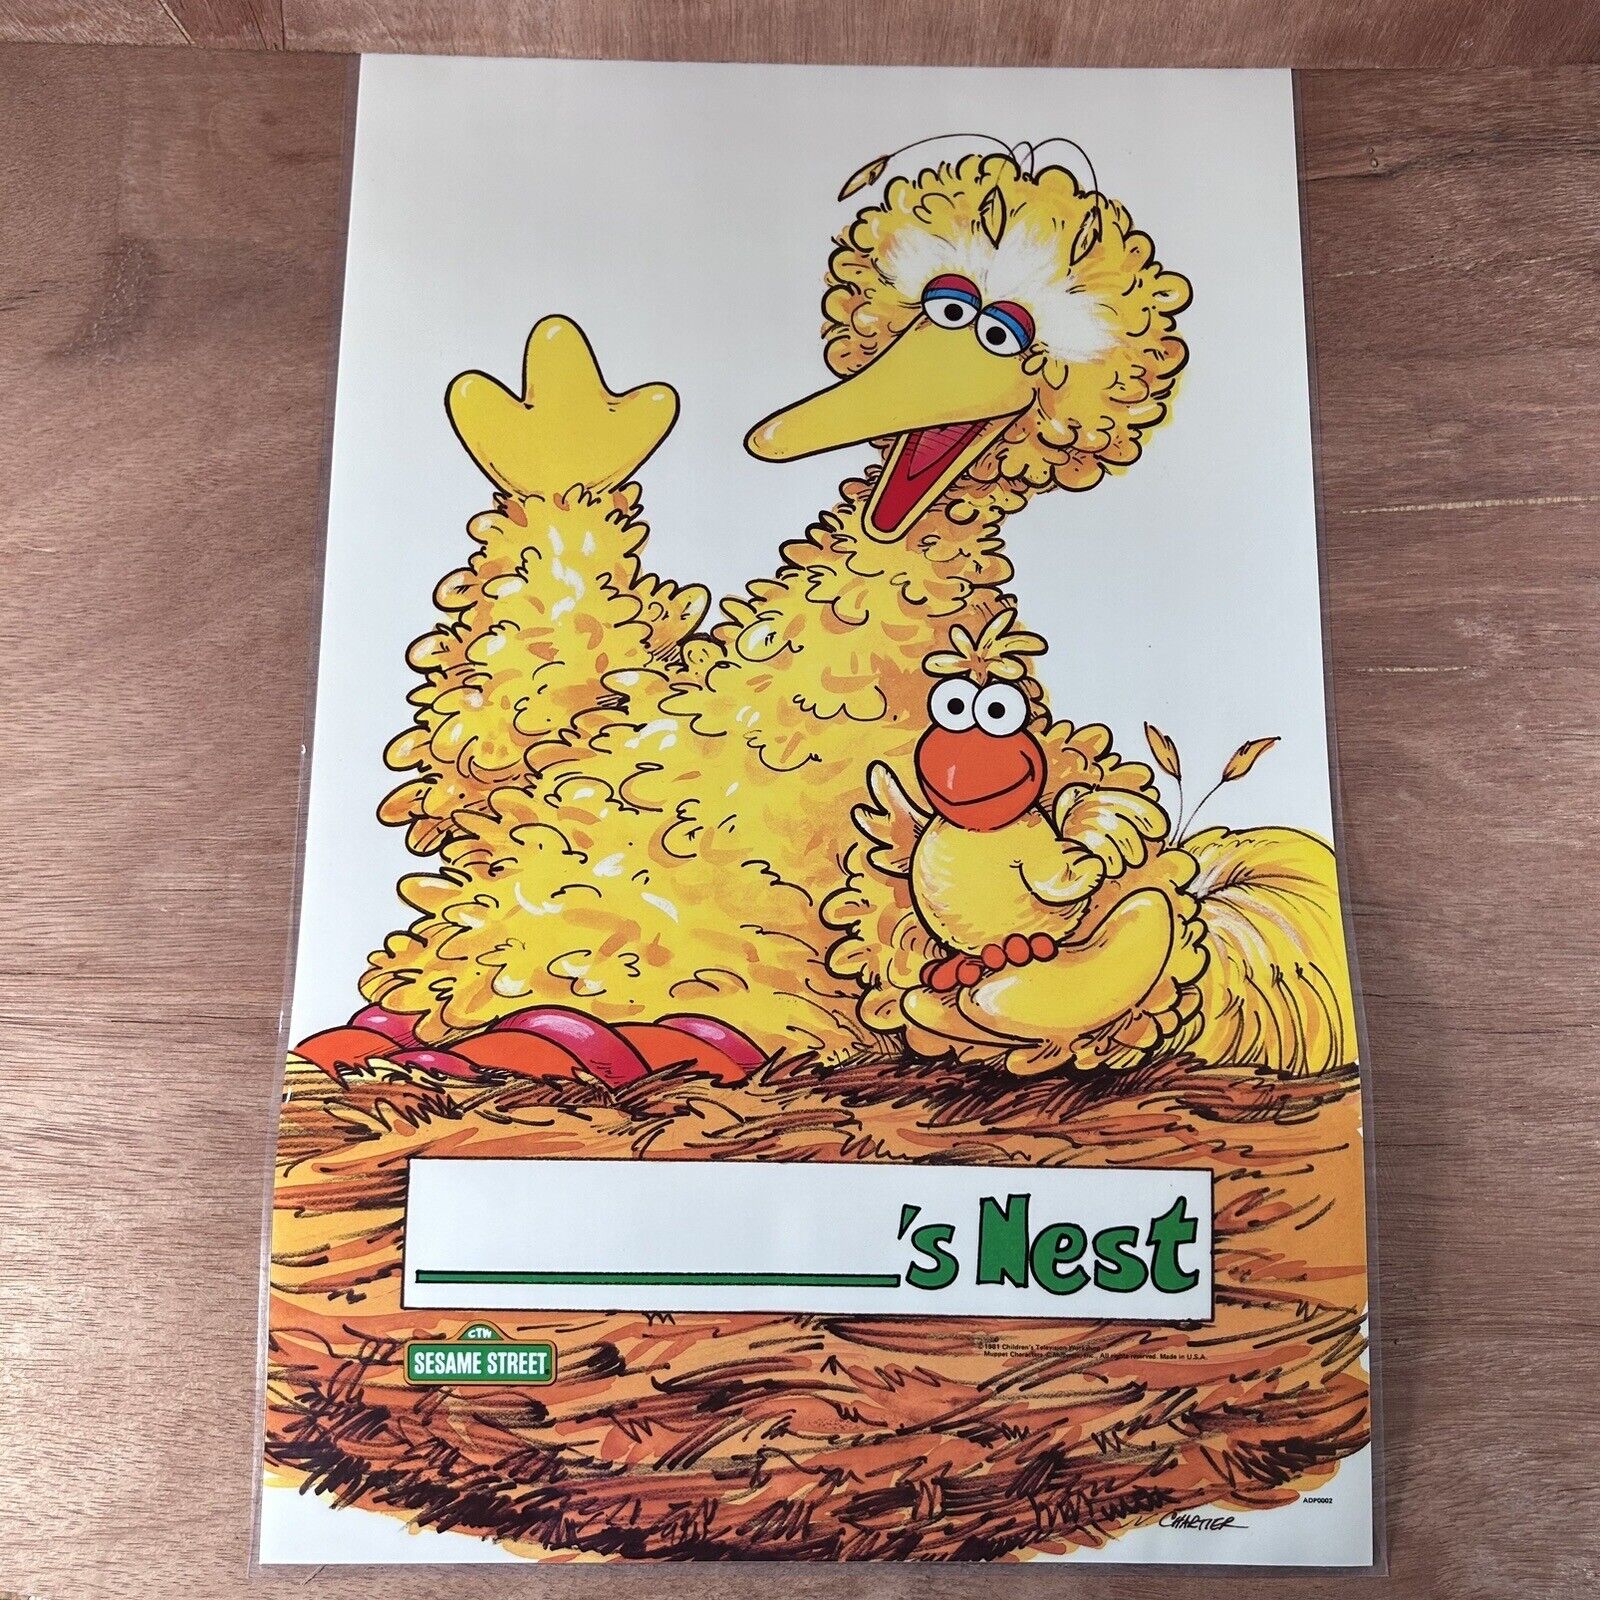 VTG 1981 Sesame Street Big Bird Someone\'s Nest Laminated Poster Made In USA